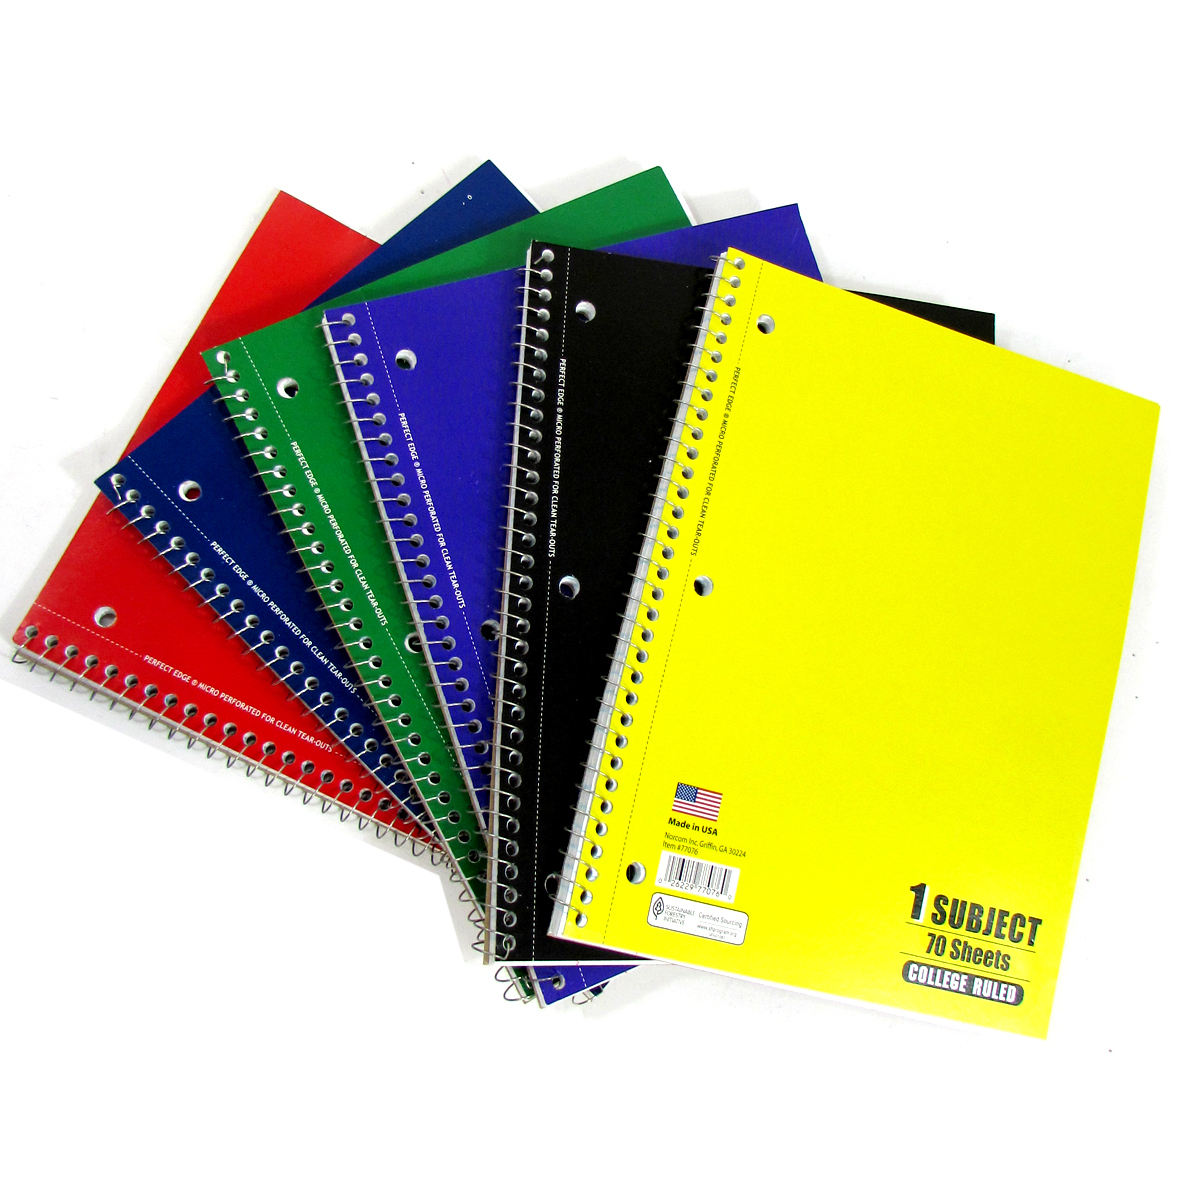 Wholesale 1 Subject Spiral Notebook 70 Sheets (SKU